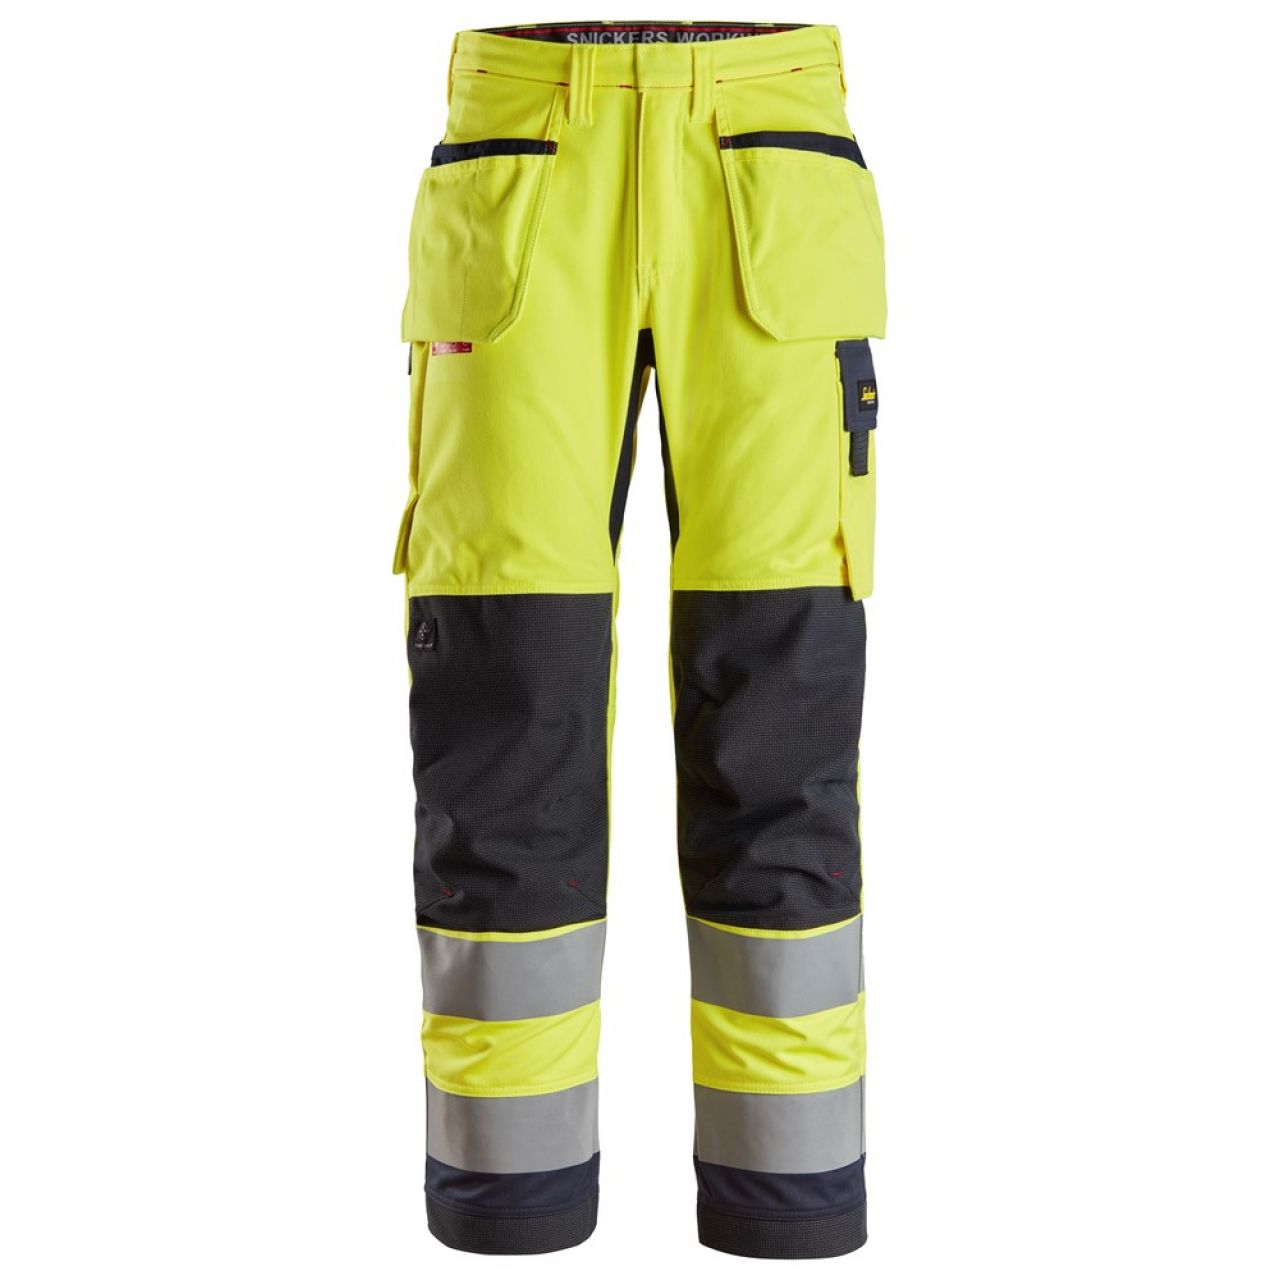 6260 Pantalones largos de trabajo de alta visibilidad clase 2 con bolsillos flotantes ProtecWork amarillo-azul marino talla 162